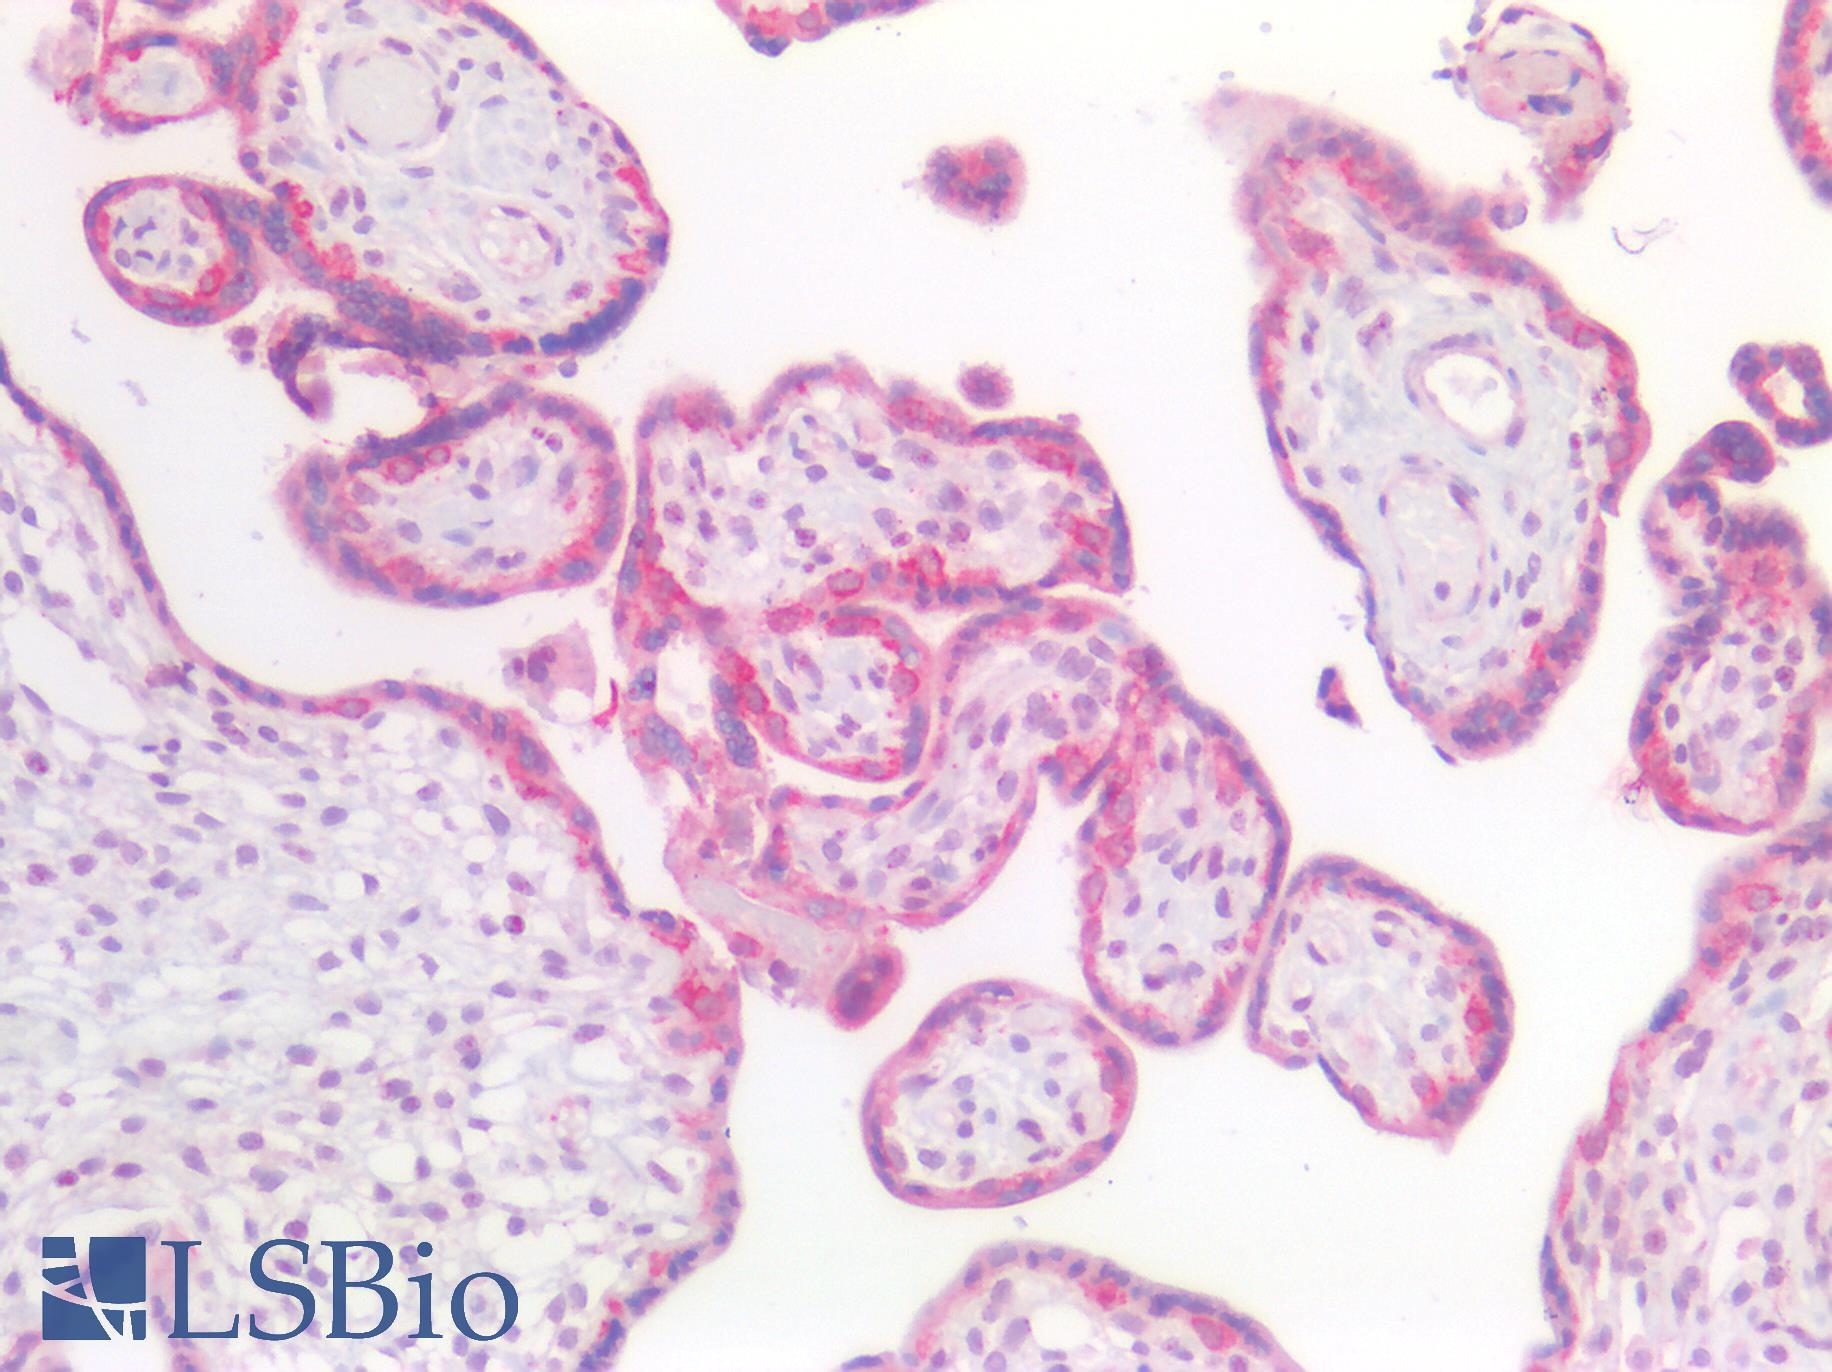 INHBA / Inhibin Beta A Antibody - Human Placenta: Formalin-Fixed, Paraffin-Embedded (FFPE)